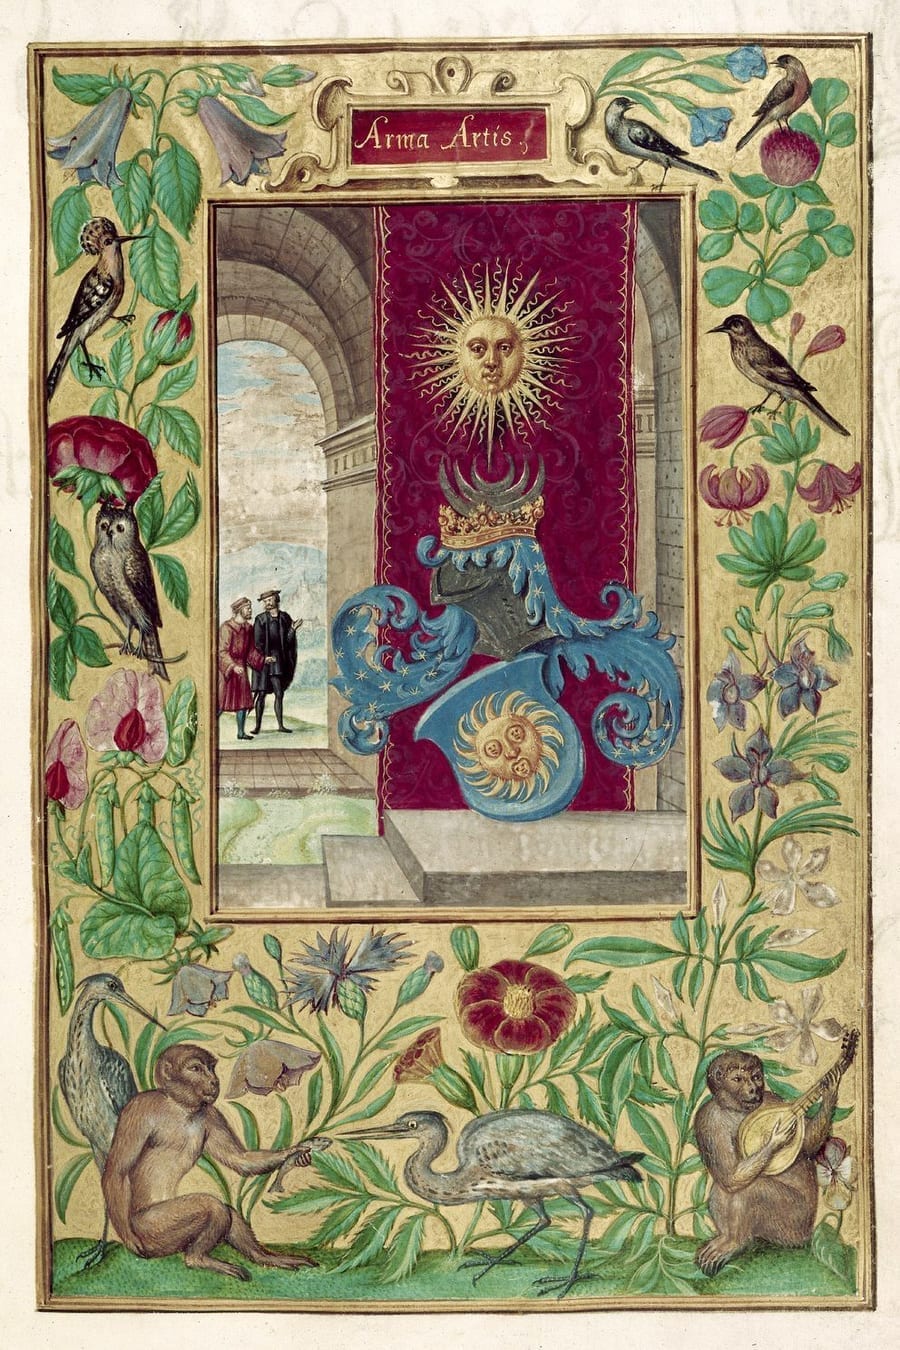 Illustration of two men conversing from the Alchemical manuscript Splendor Solis